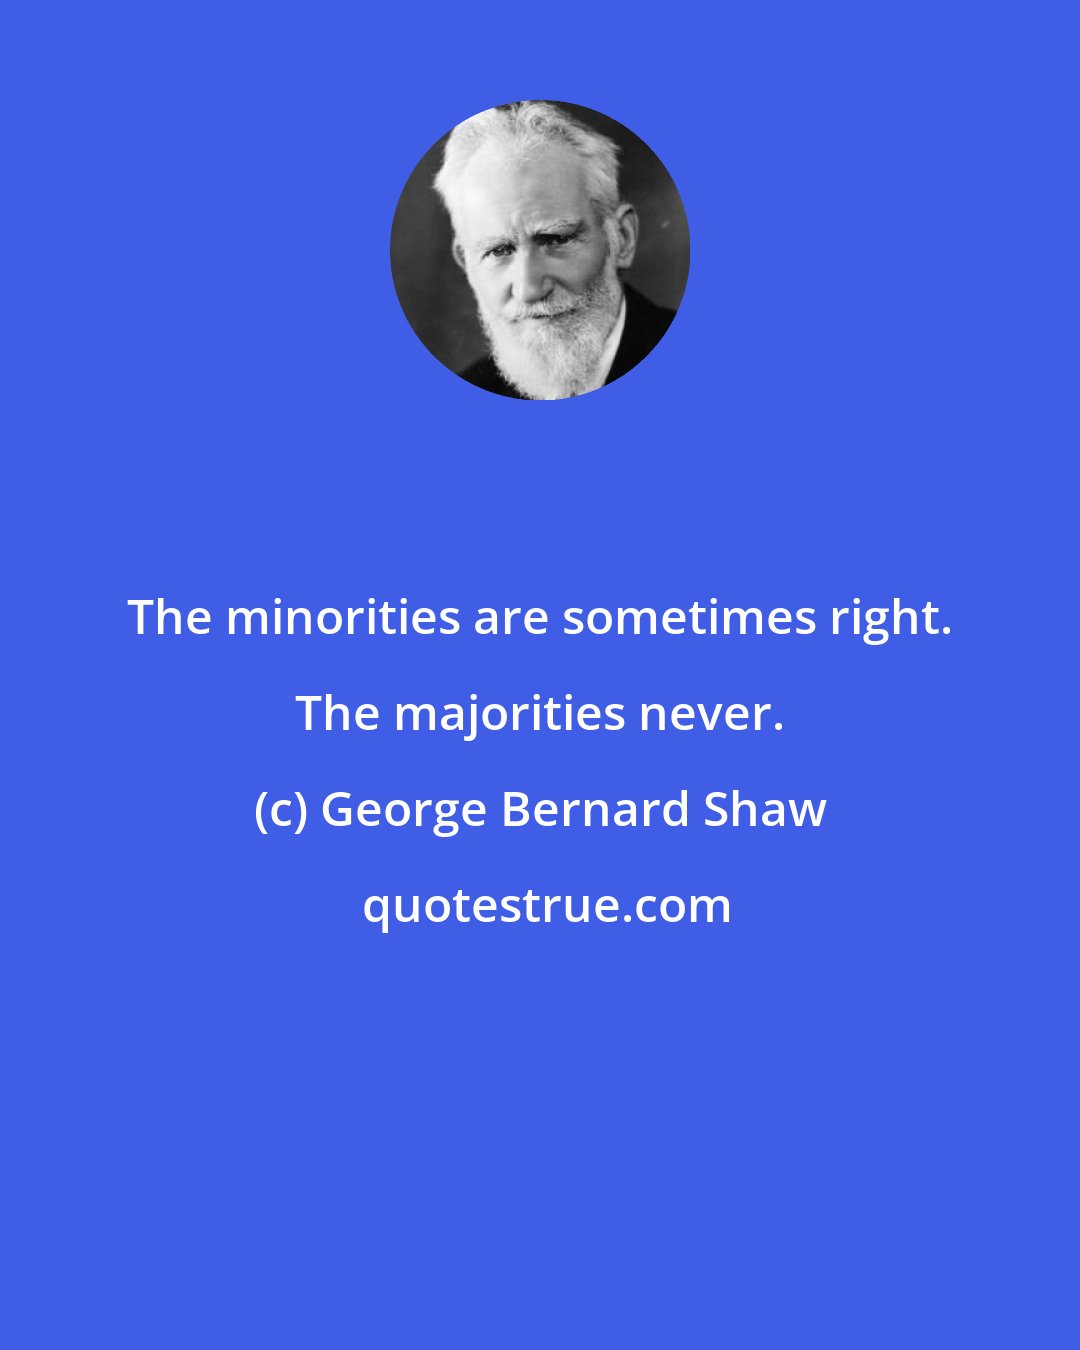 George Bernard Shaw: The minorities are sometimes right. The majorities never.